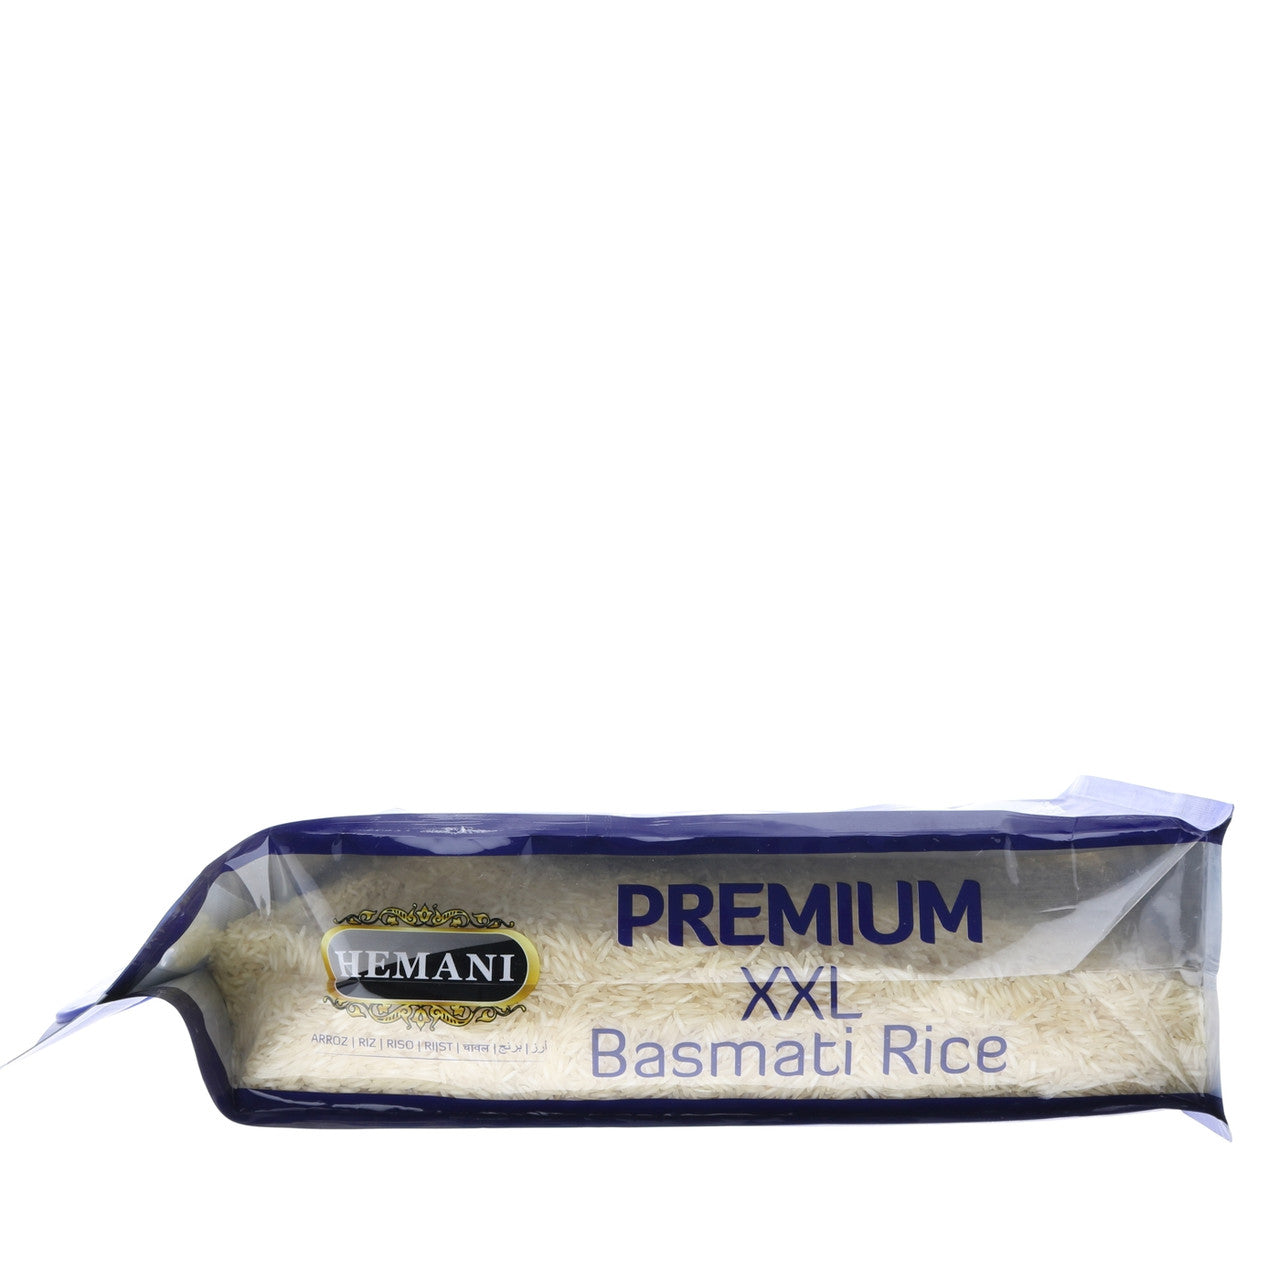 HEMANI Premium XXL Basmati 1121 Rice 11LB